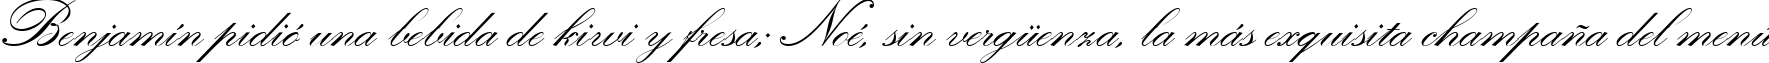 Пример написания шрифтом Heather Script Two текста на испанском